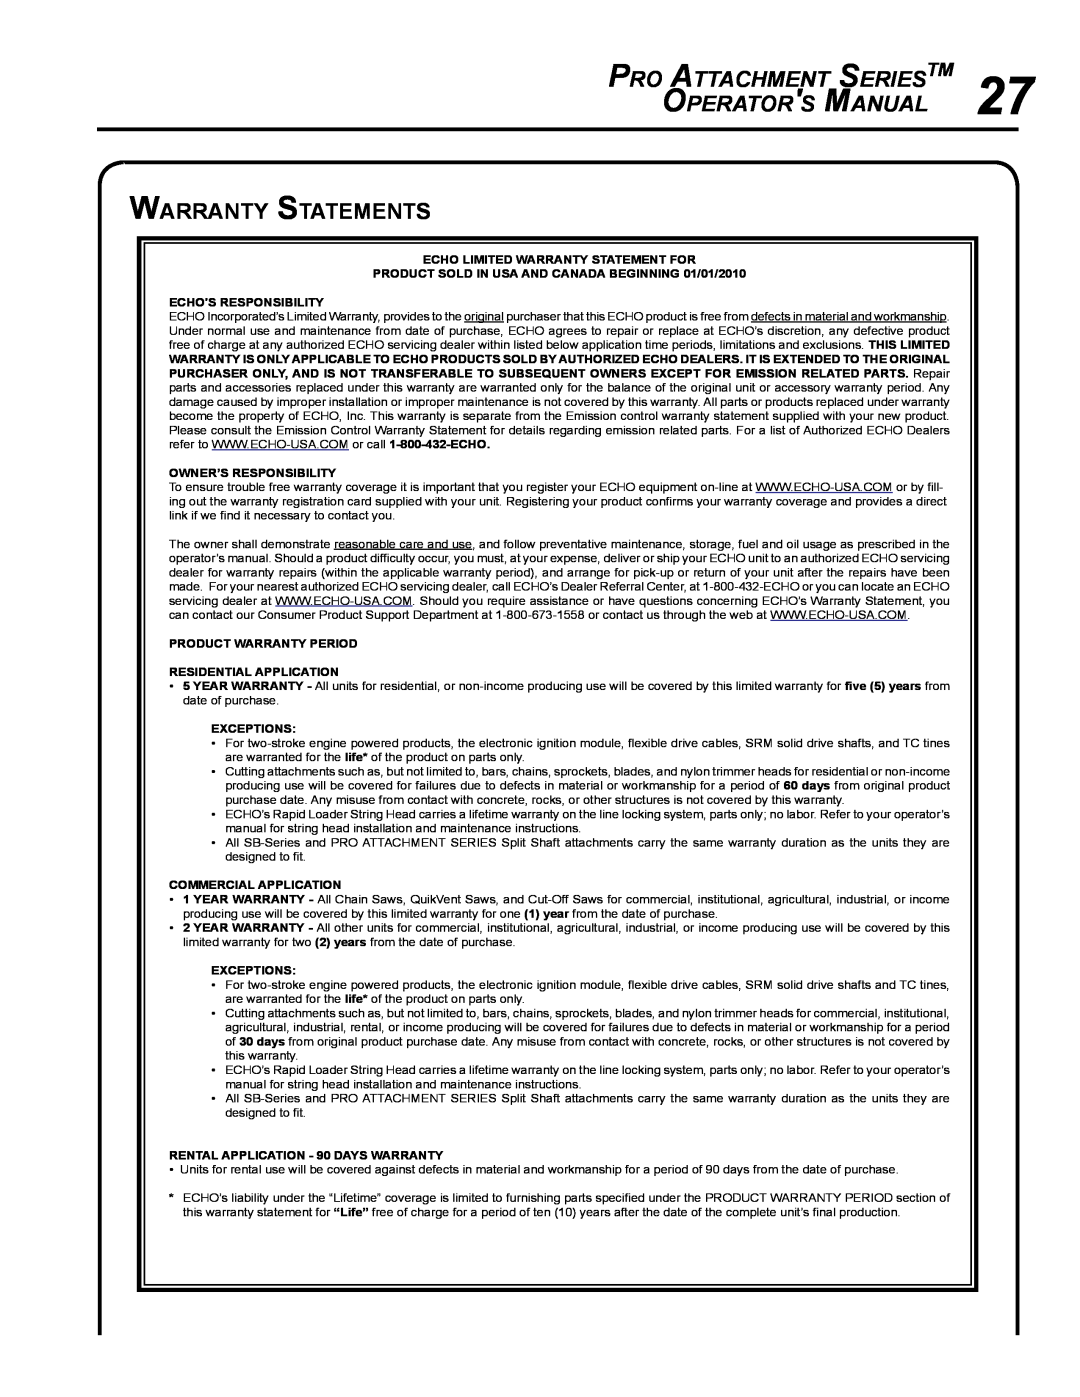 Echo PAS-265 manual Warranty Statements, Pro Attachment SeriesTM Operators Manual, Echo Limited Warranty Statement For 